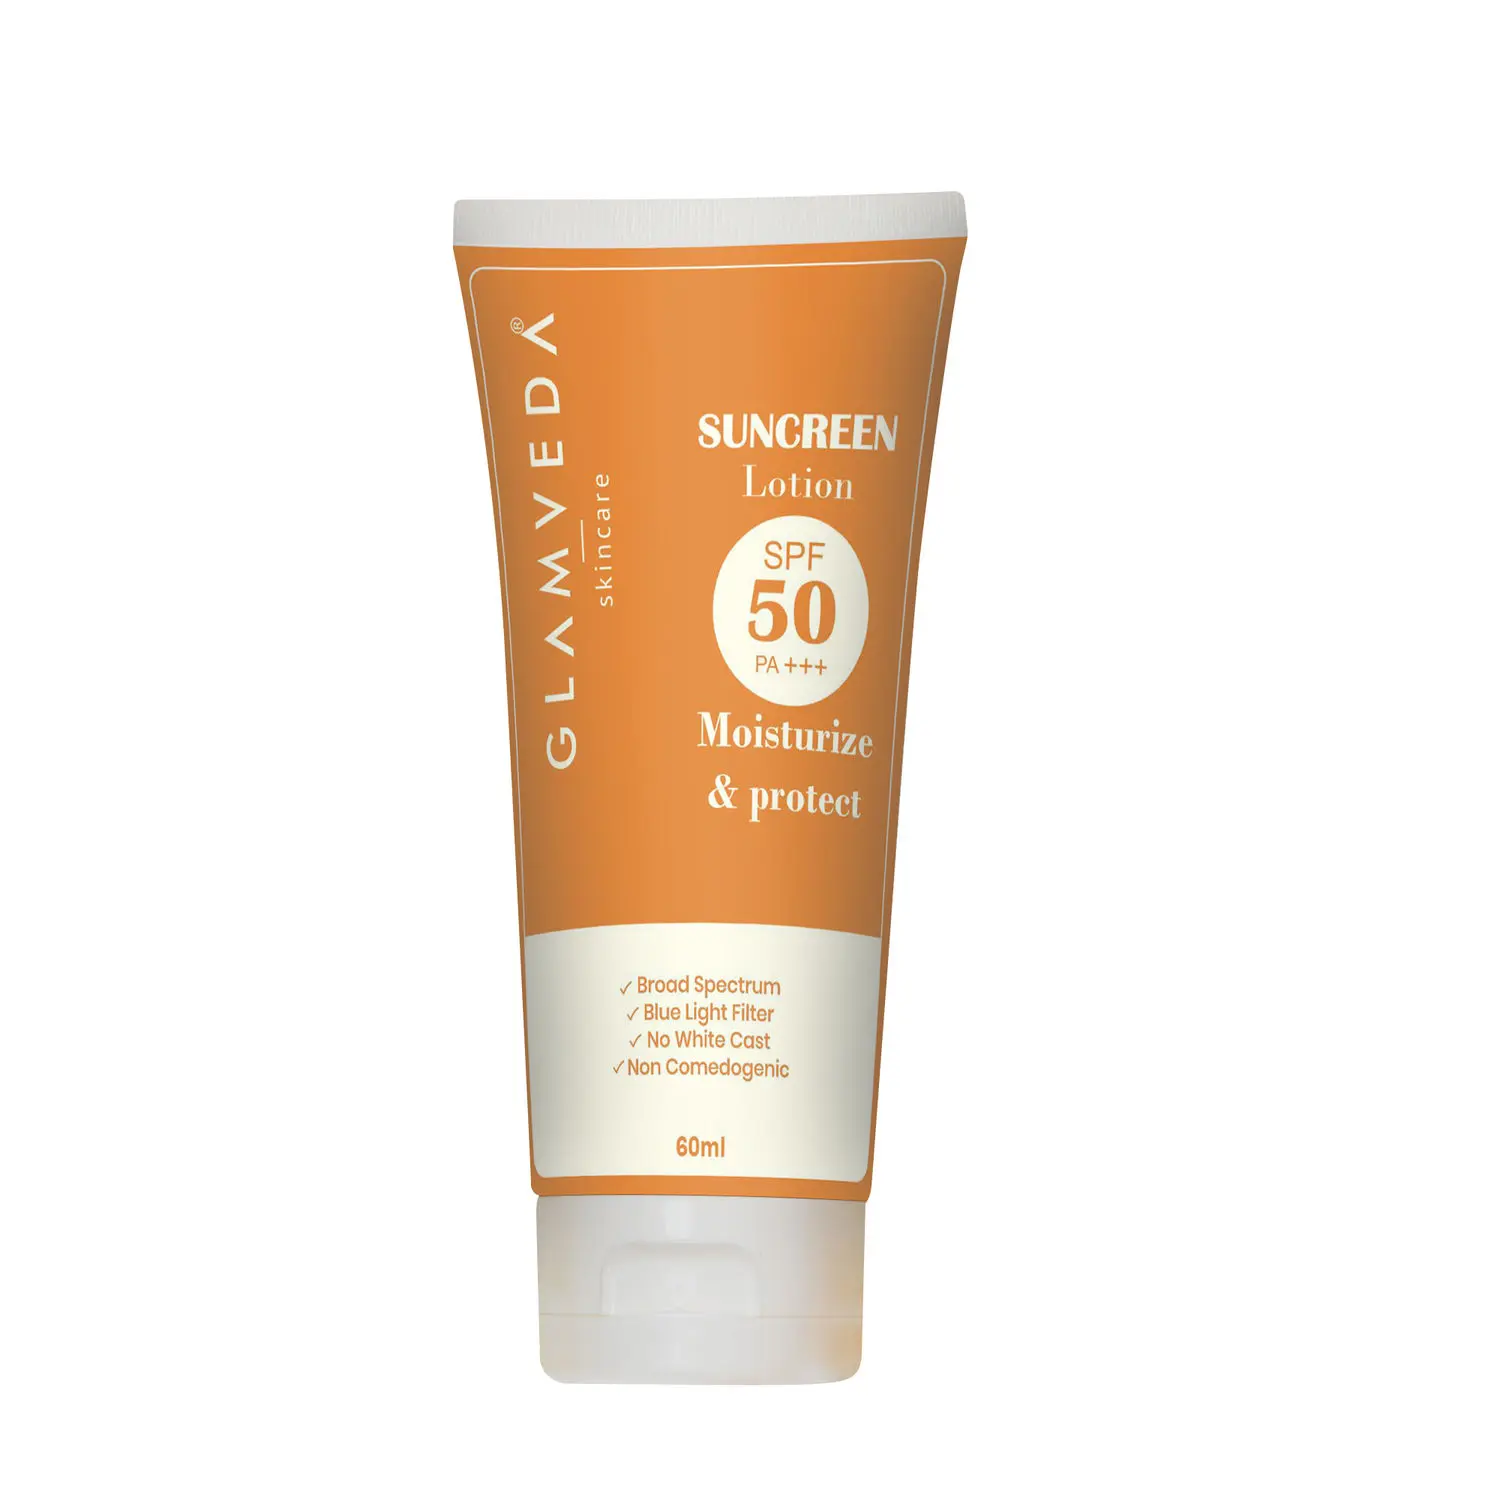 Glamveda Hybrid Sunscreen Lotion Spf 50 PA+++ Moisturize & Protect (60 ml)